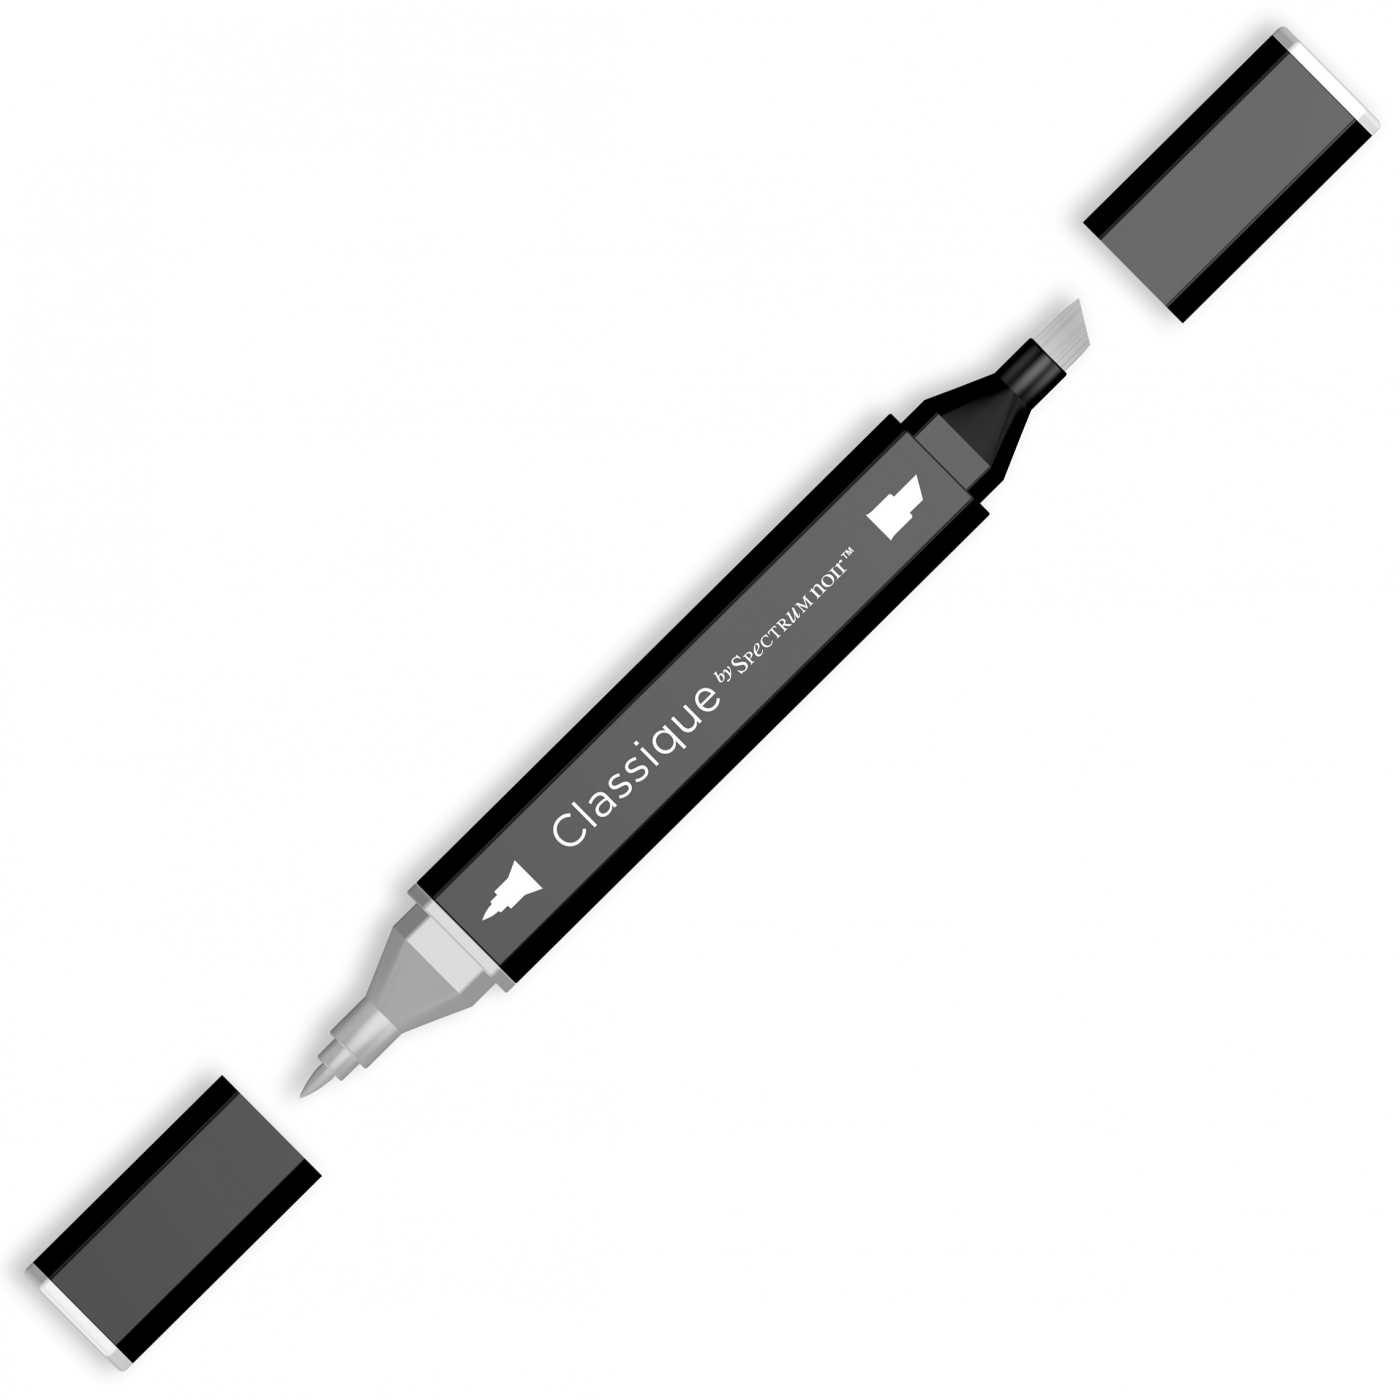 Classic Marker Blender in the group Pens / Artist Pens / Illustration Markers at Pen Store (111818)